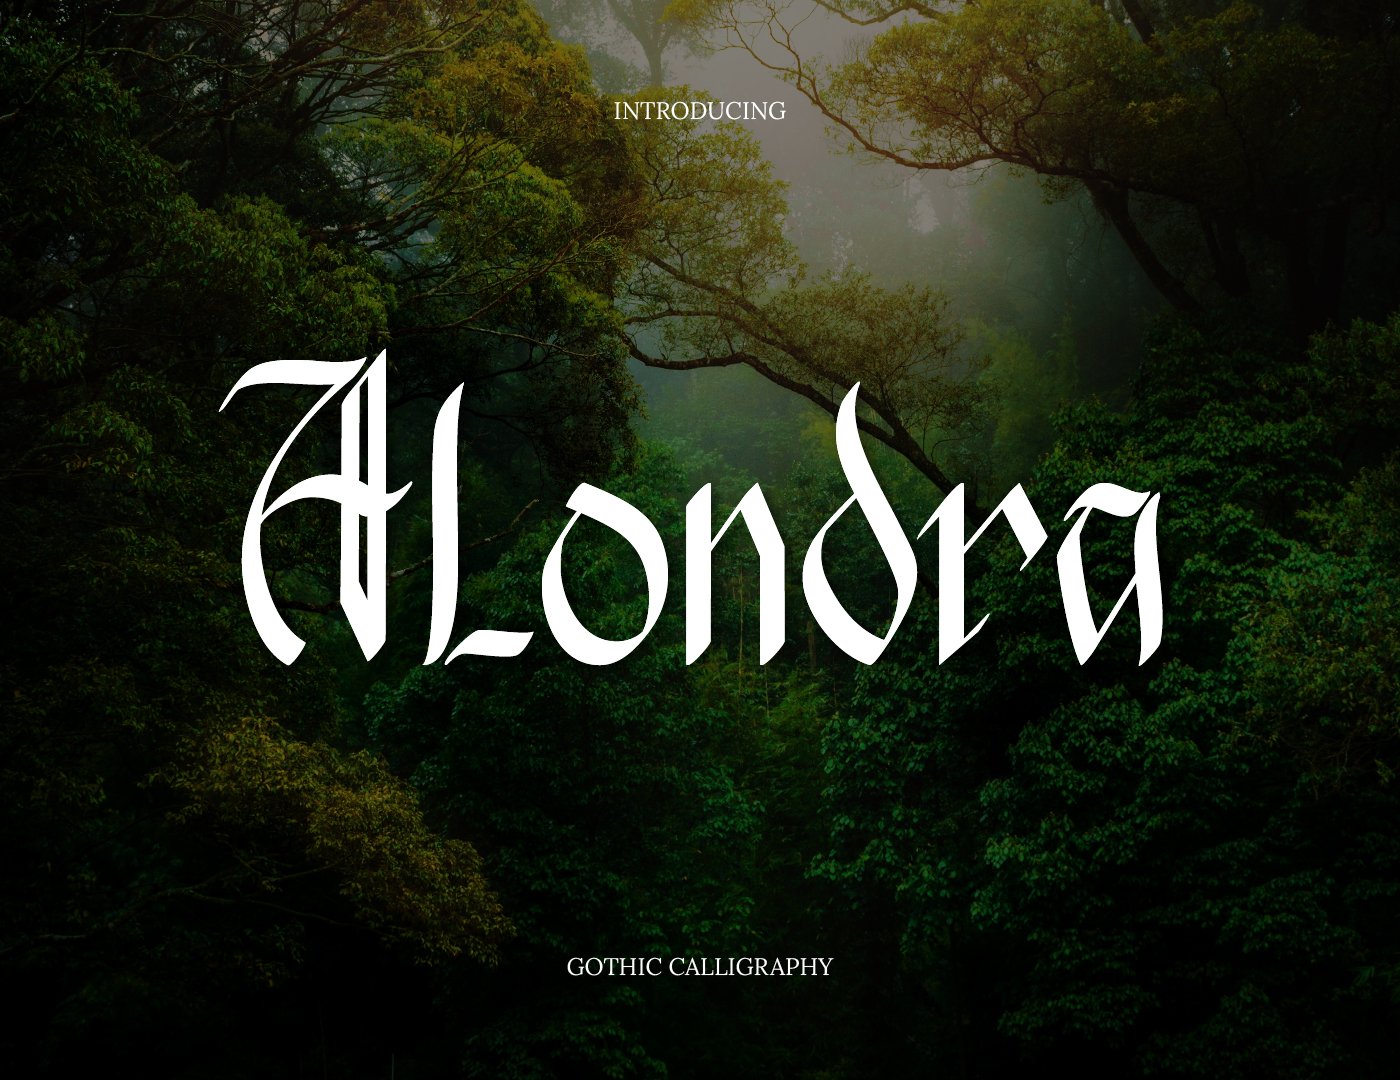 Alondra Handwritten Font cover image.